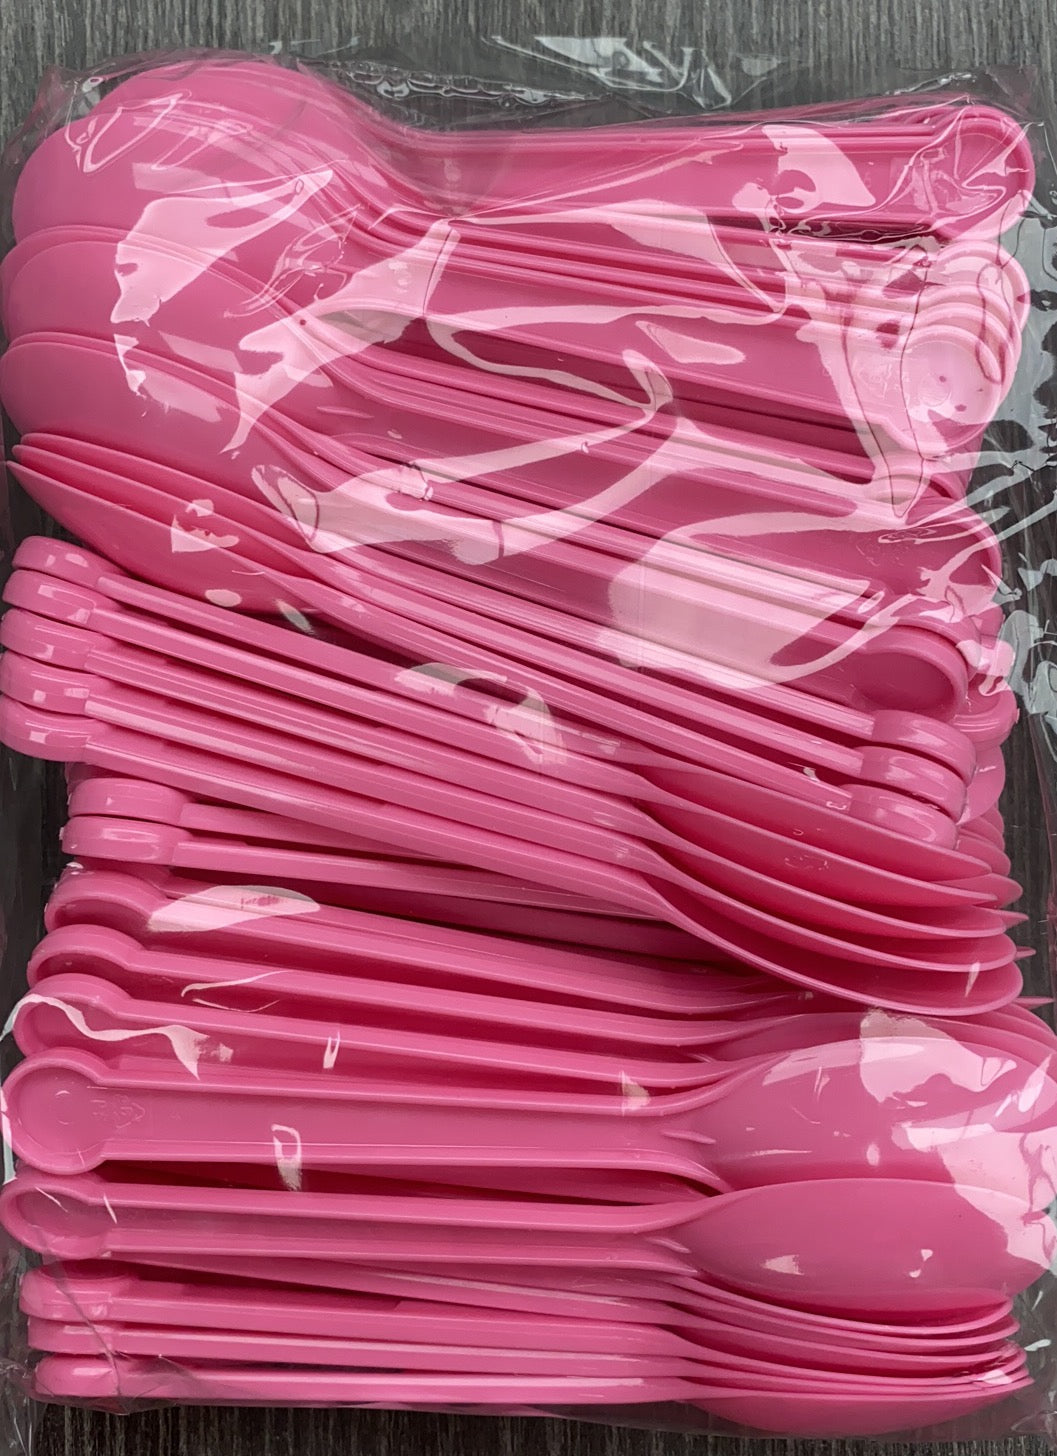 PS Spoon (Pink) 100pc x 20pkt (2000 Spoons) per Case - Item #99-9378